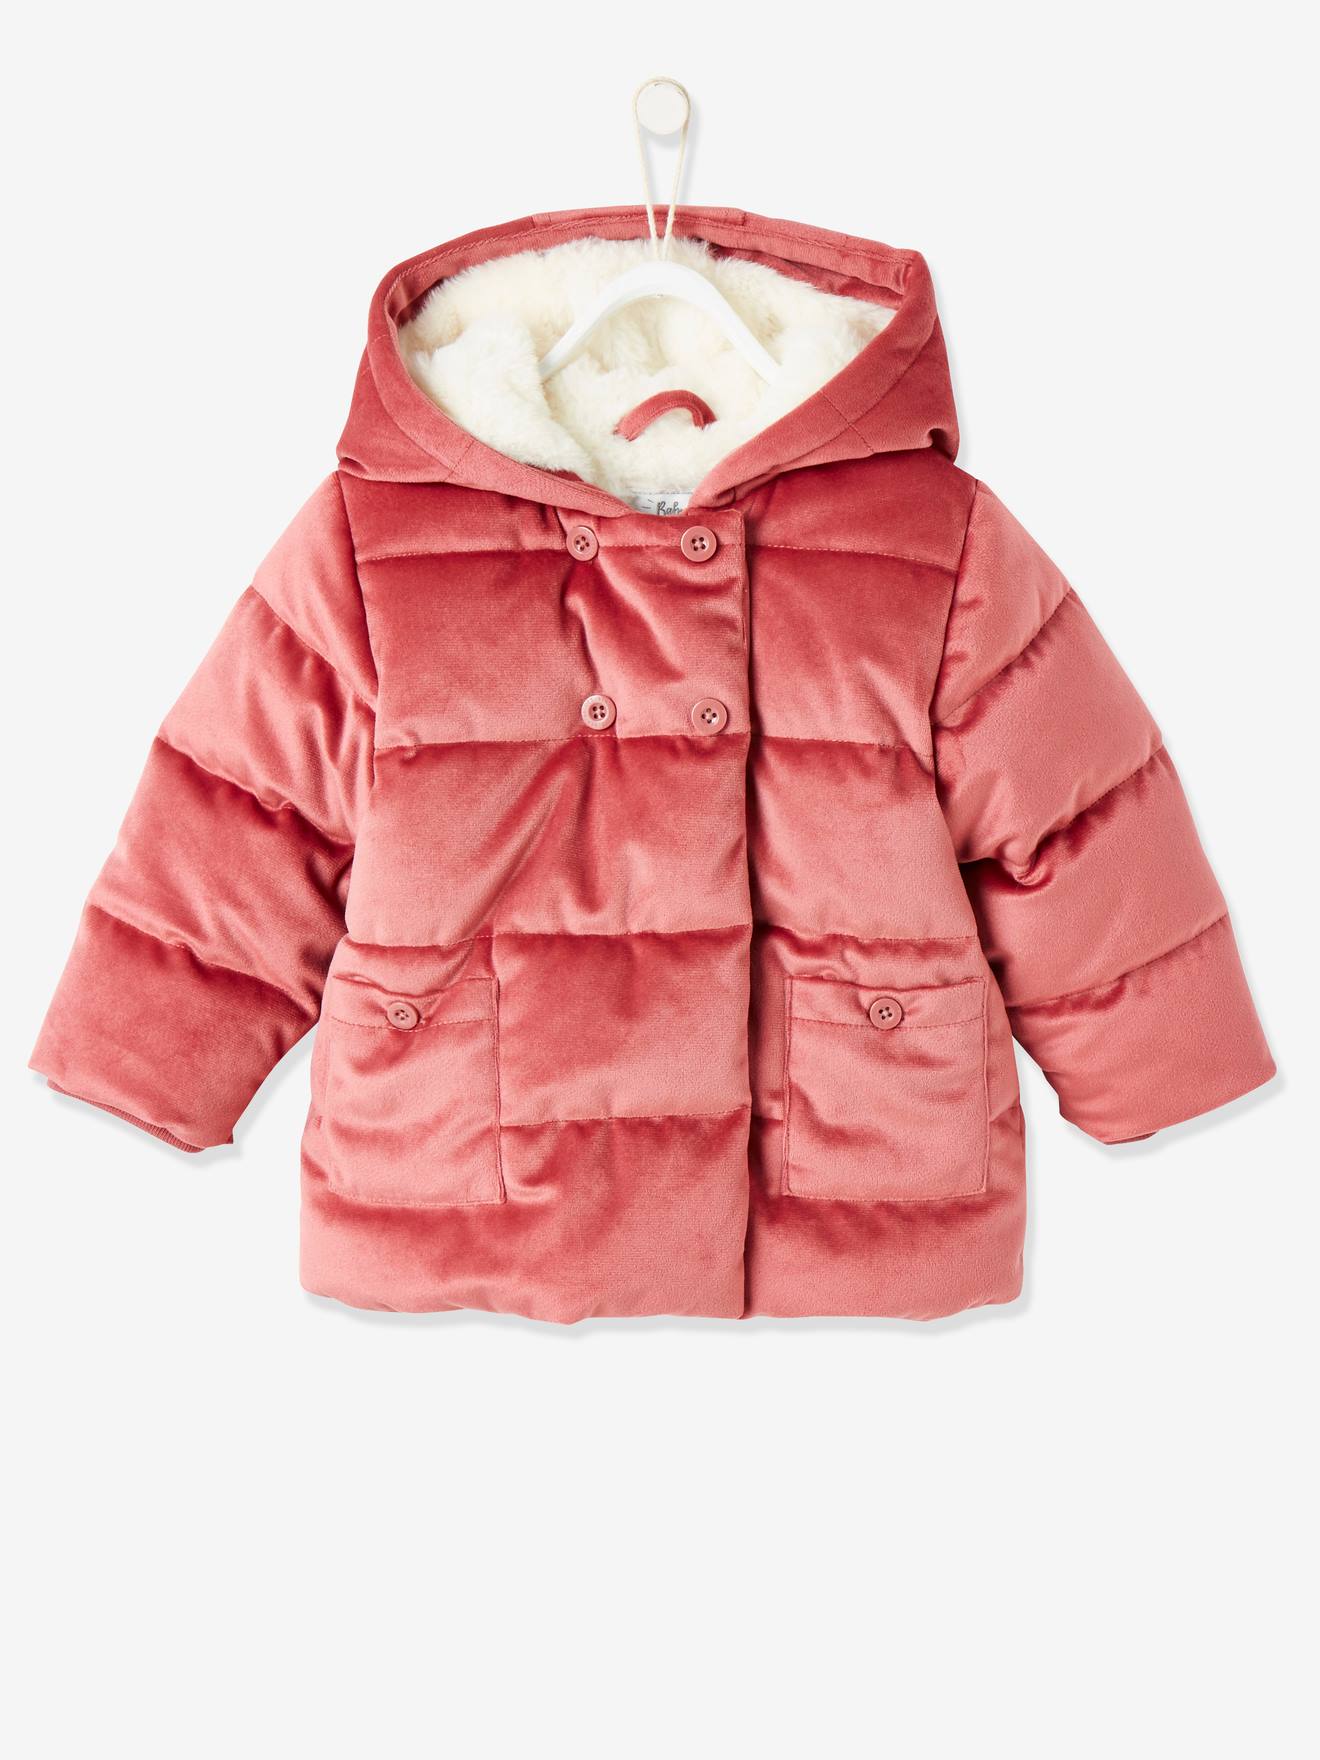 Baby snowsuit \u0026 coat - vertbaudet